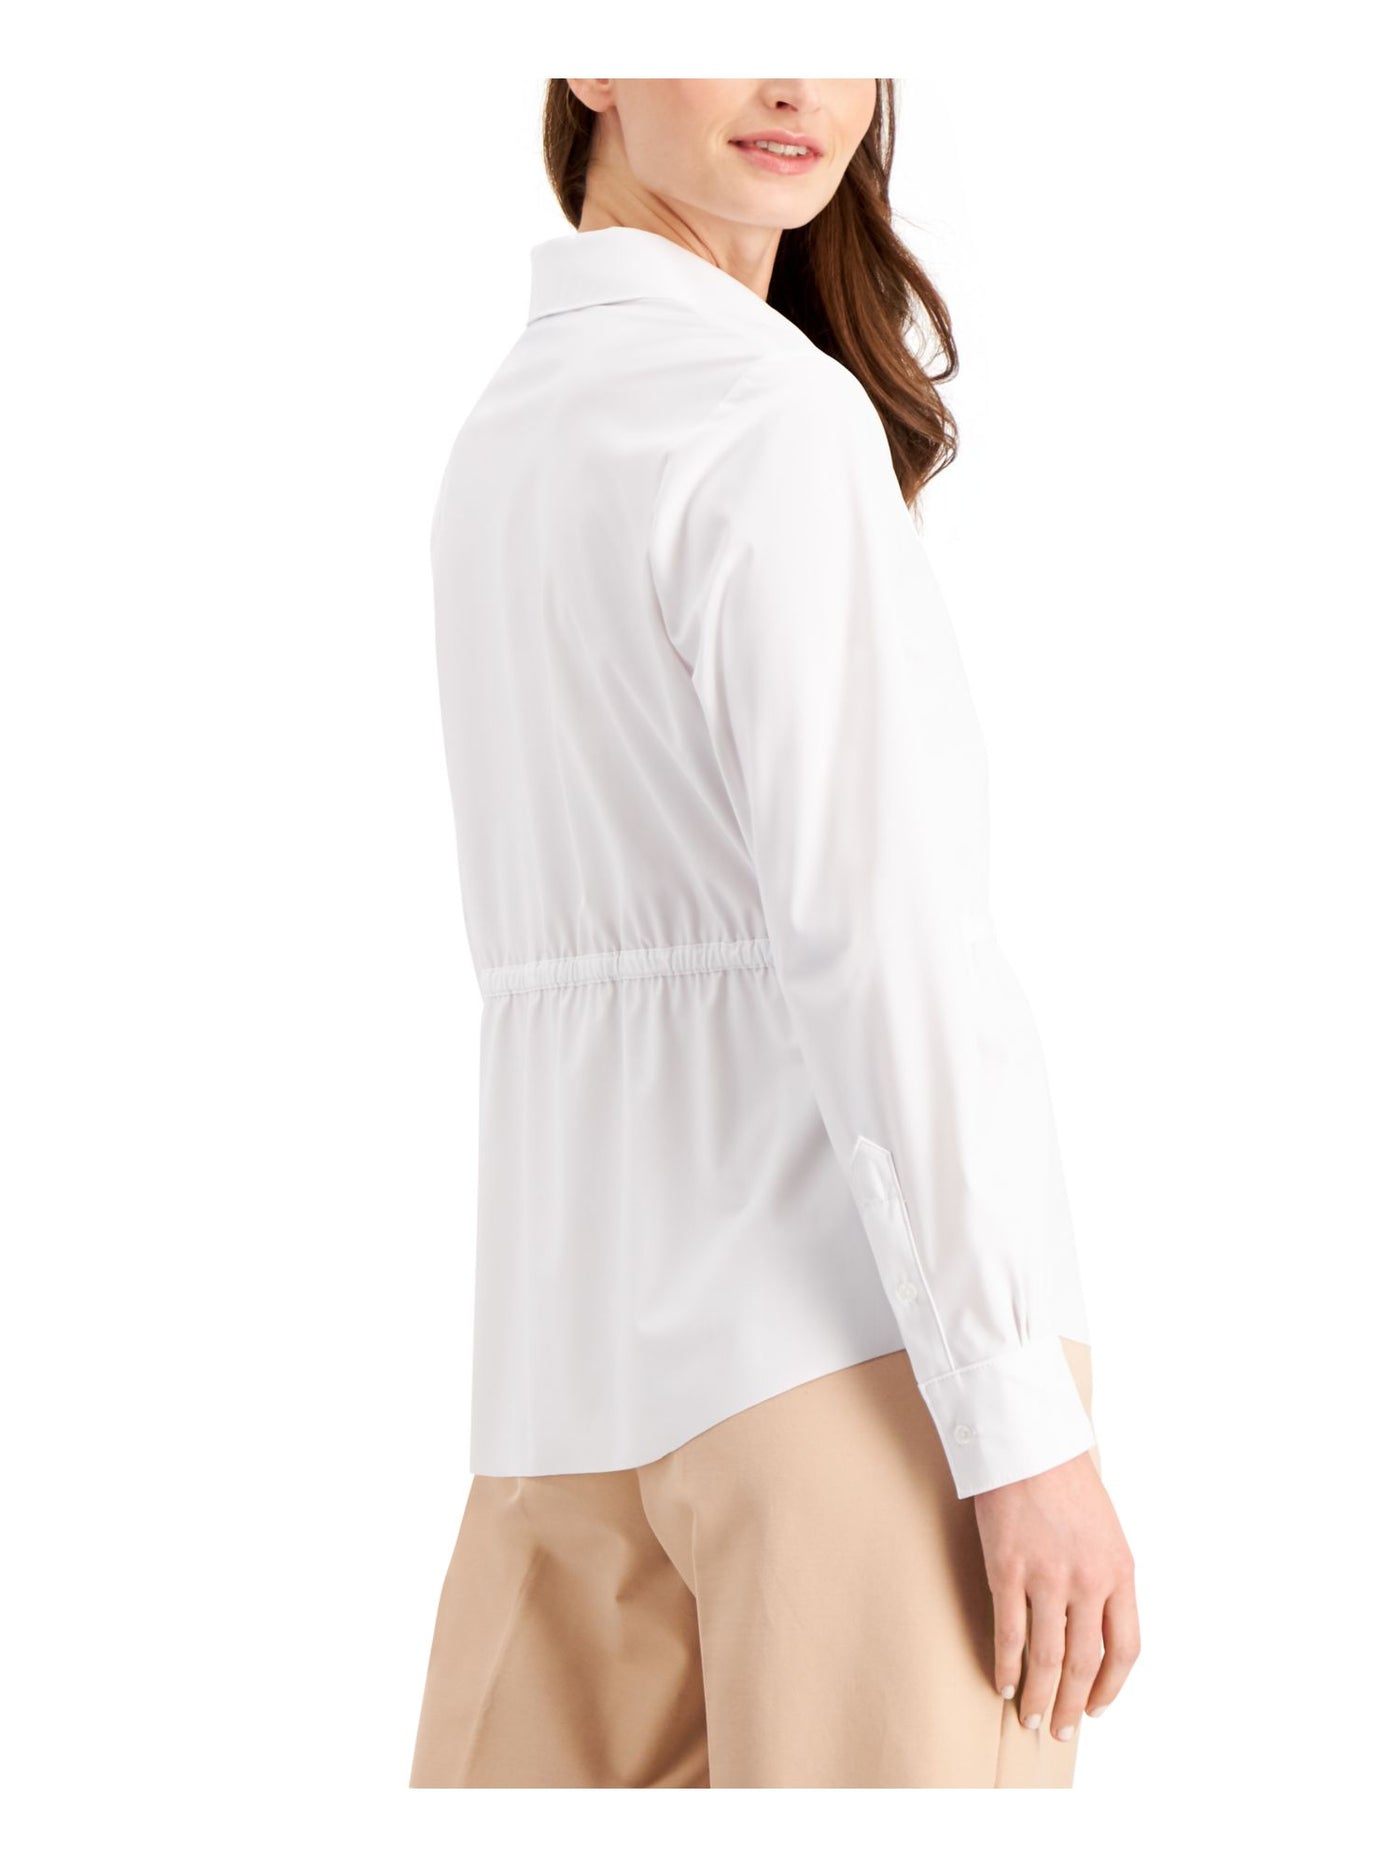 ALFANI Womens White Tie Cuffed Collared Button Up Top Size: XXL